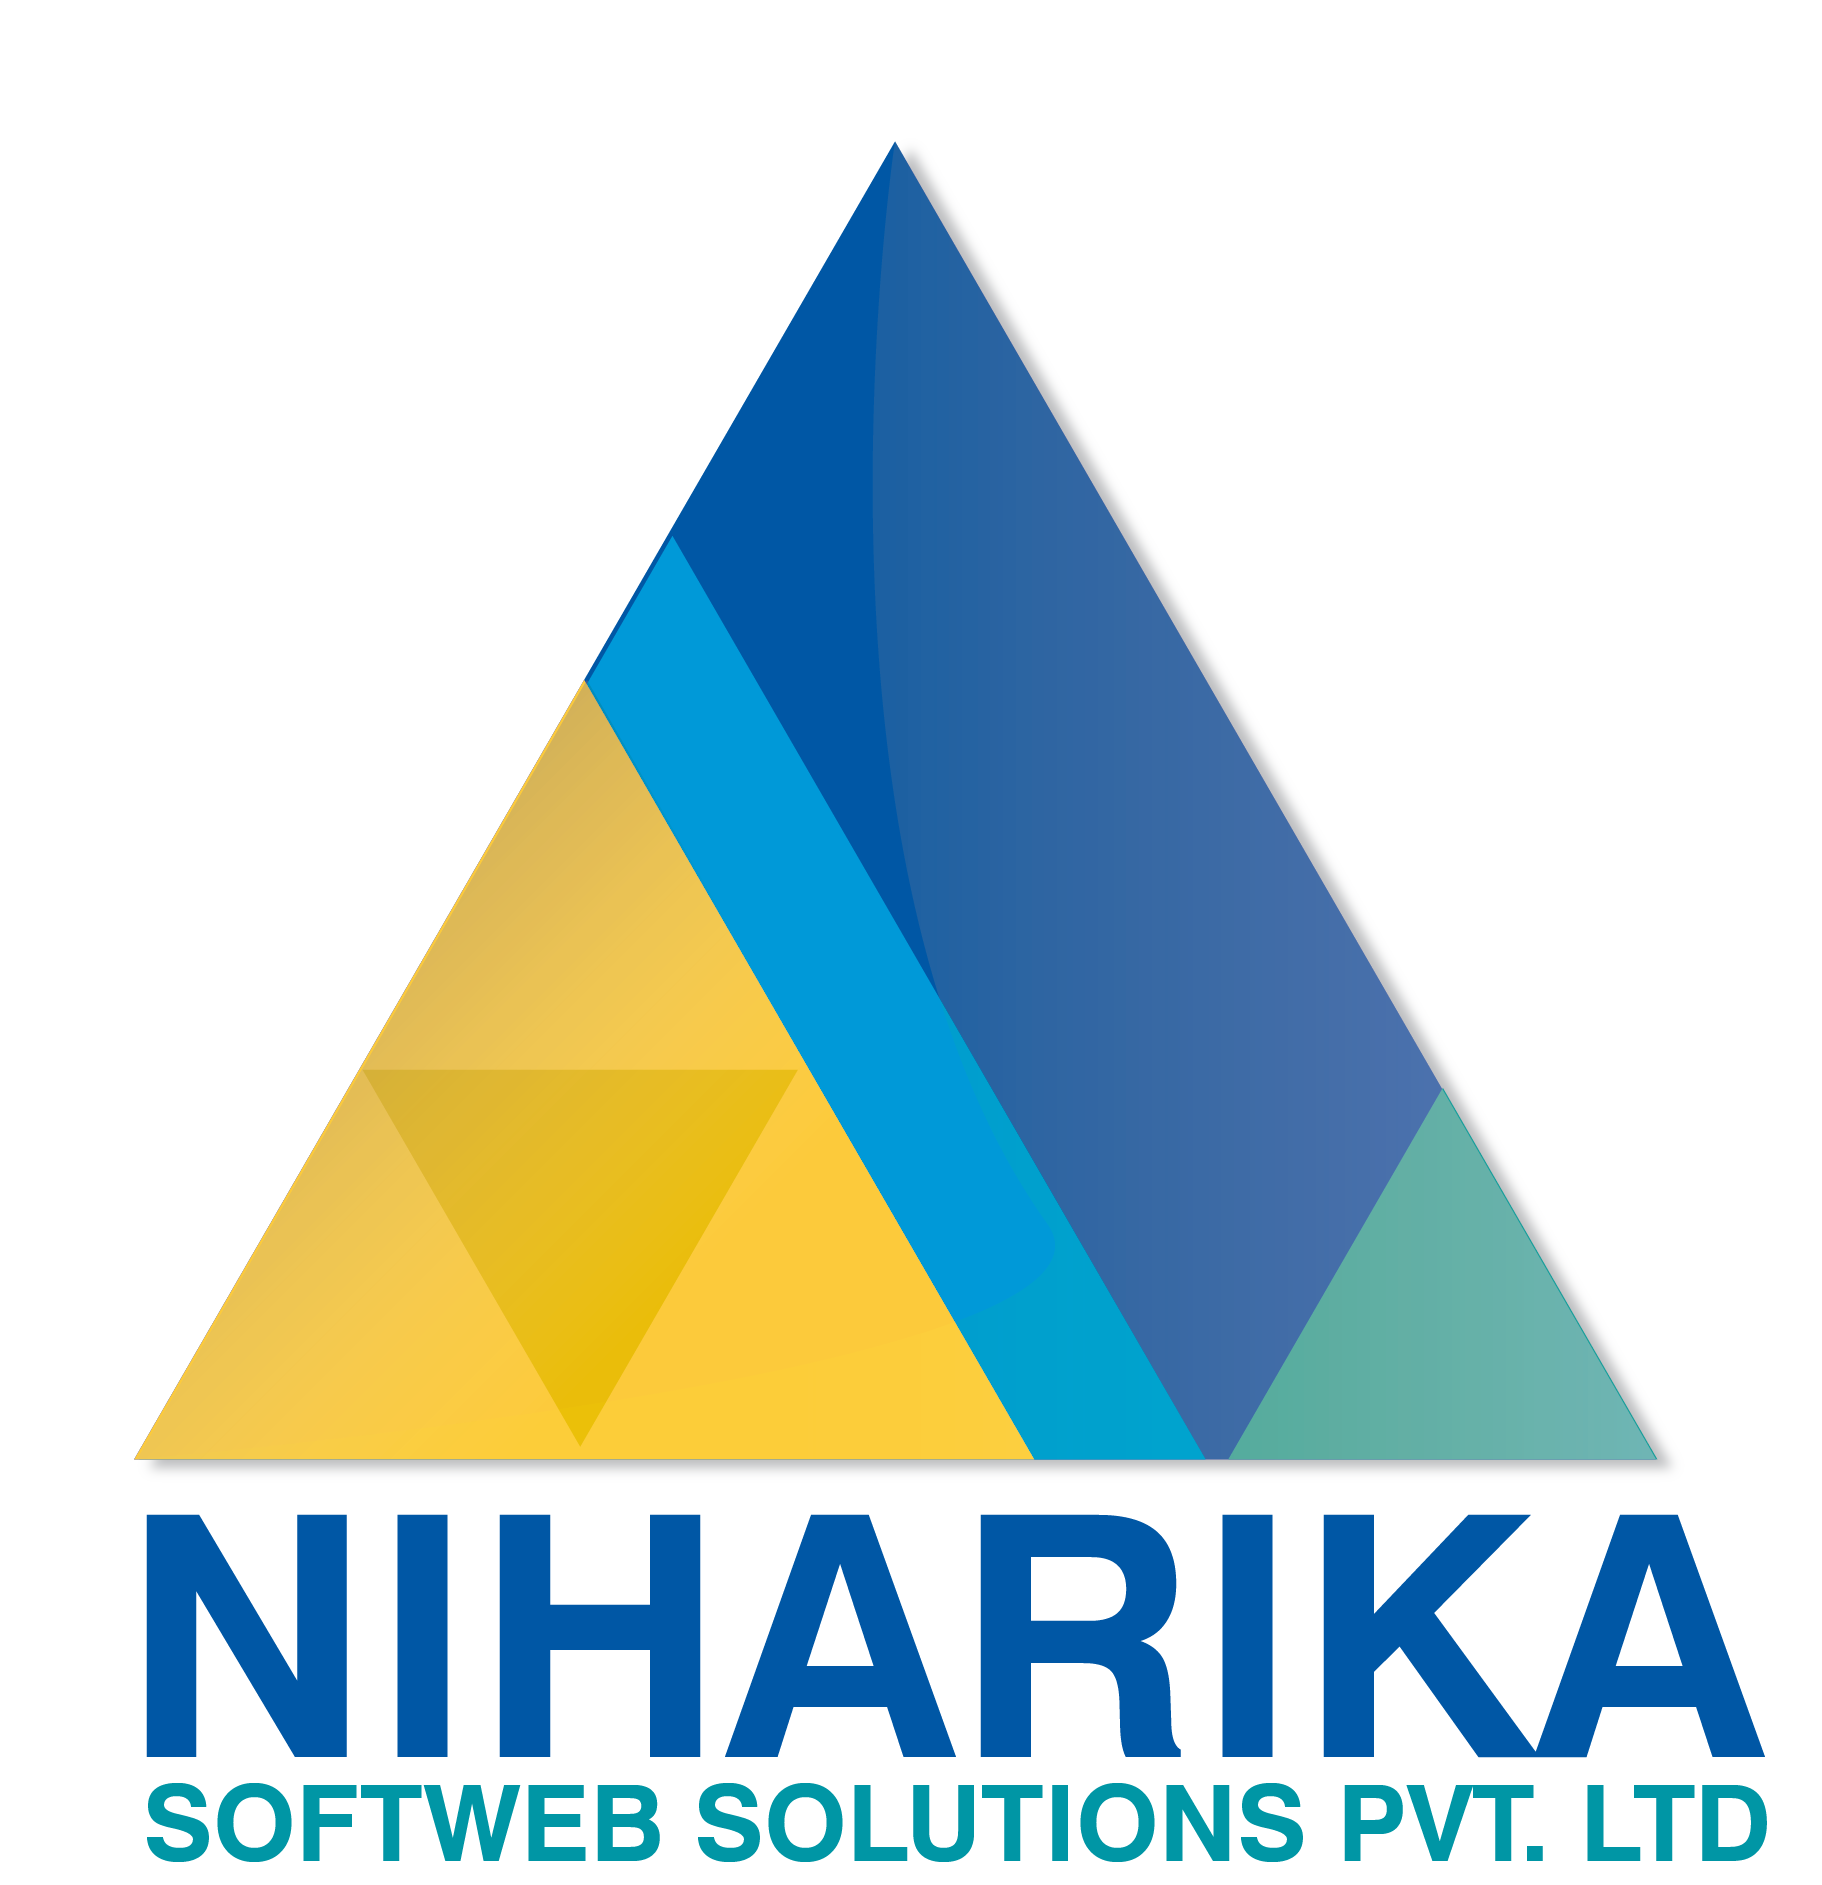 Niharika Softweb Solutions